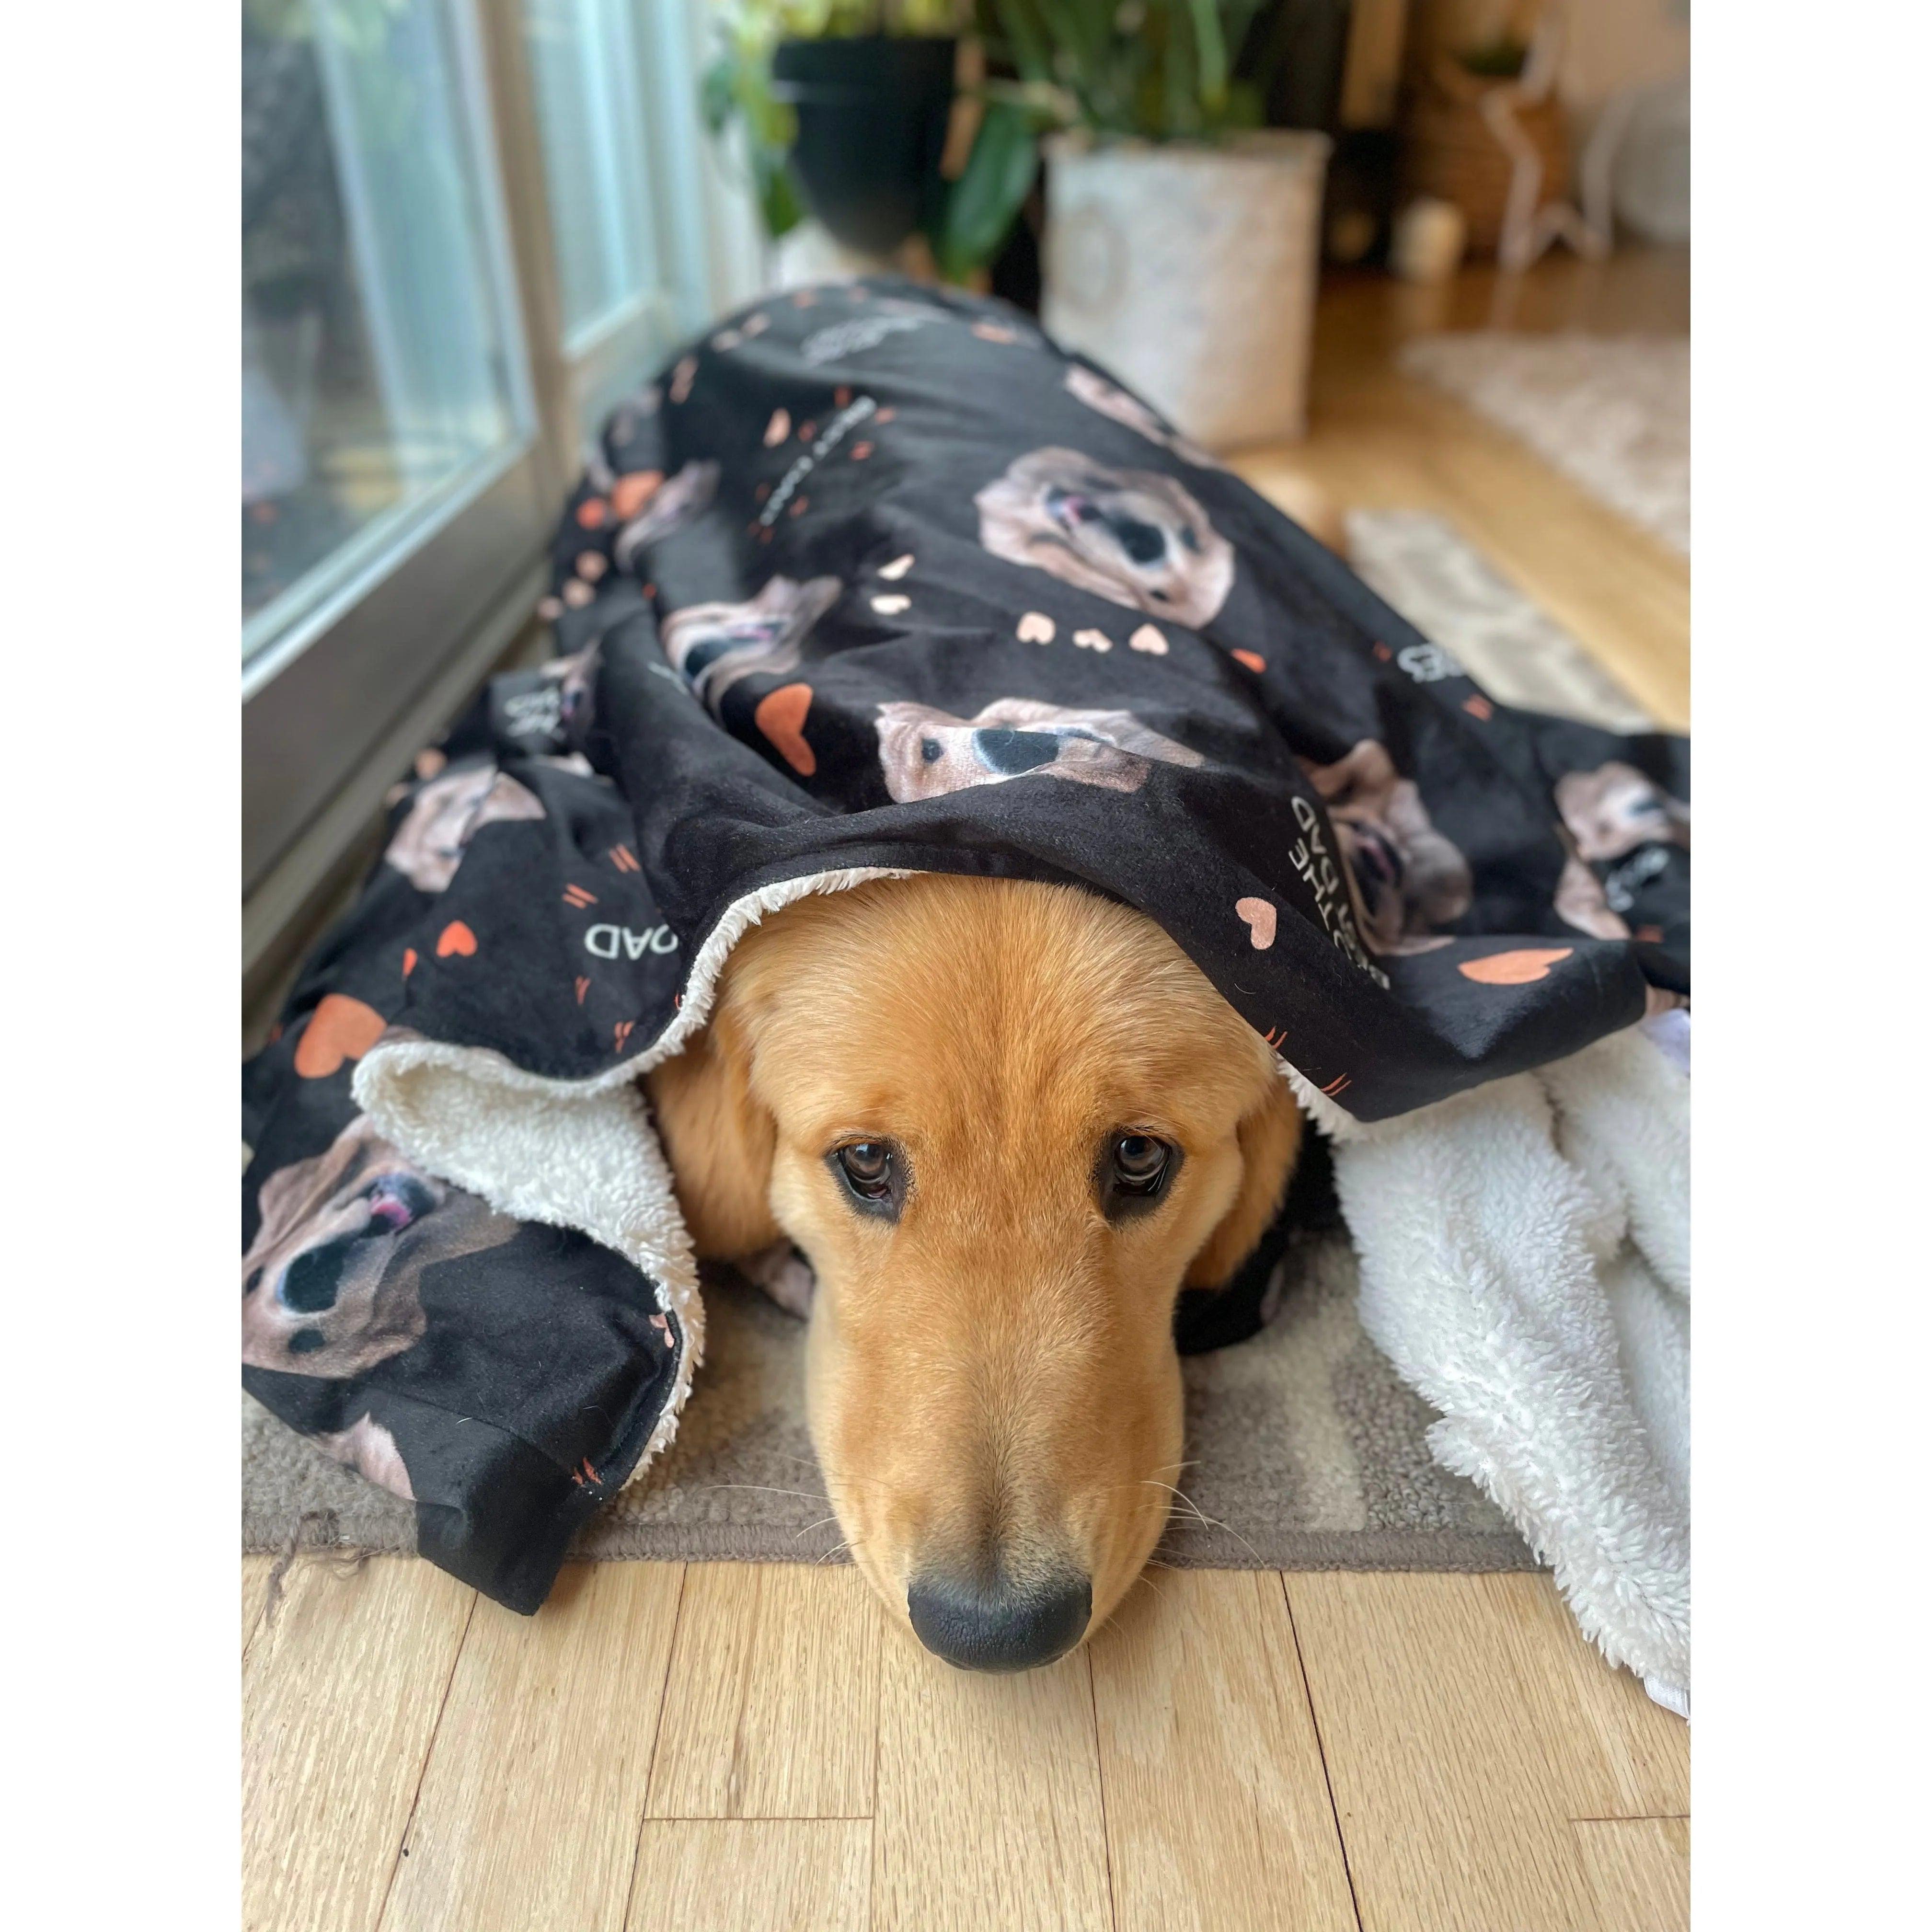 Dog Dad Hooded Blanket - Super Soft Fleece with Pet Face Pattern